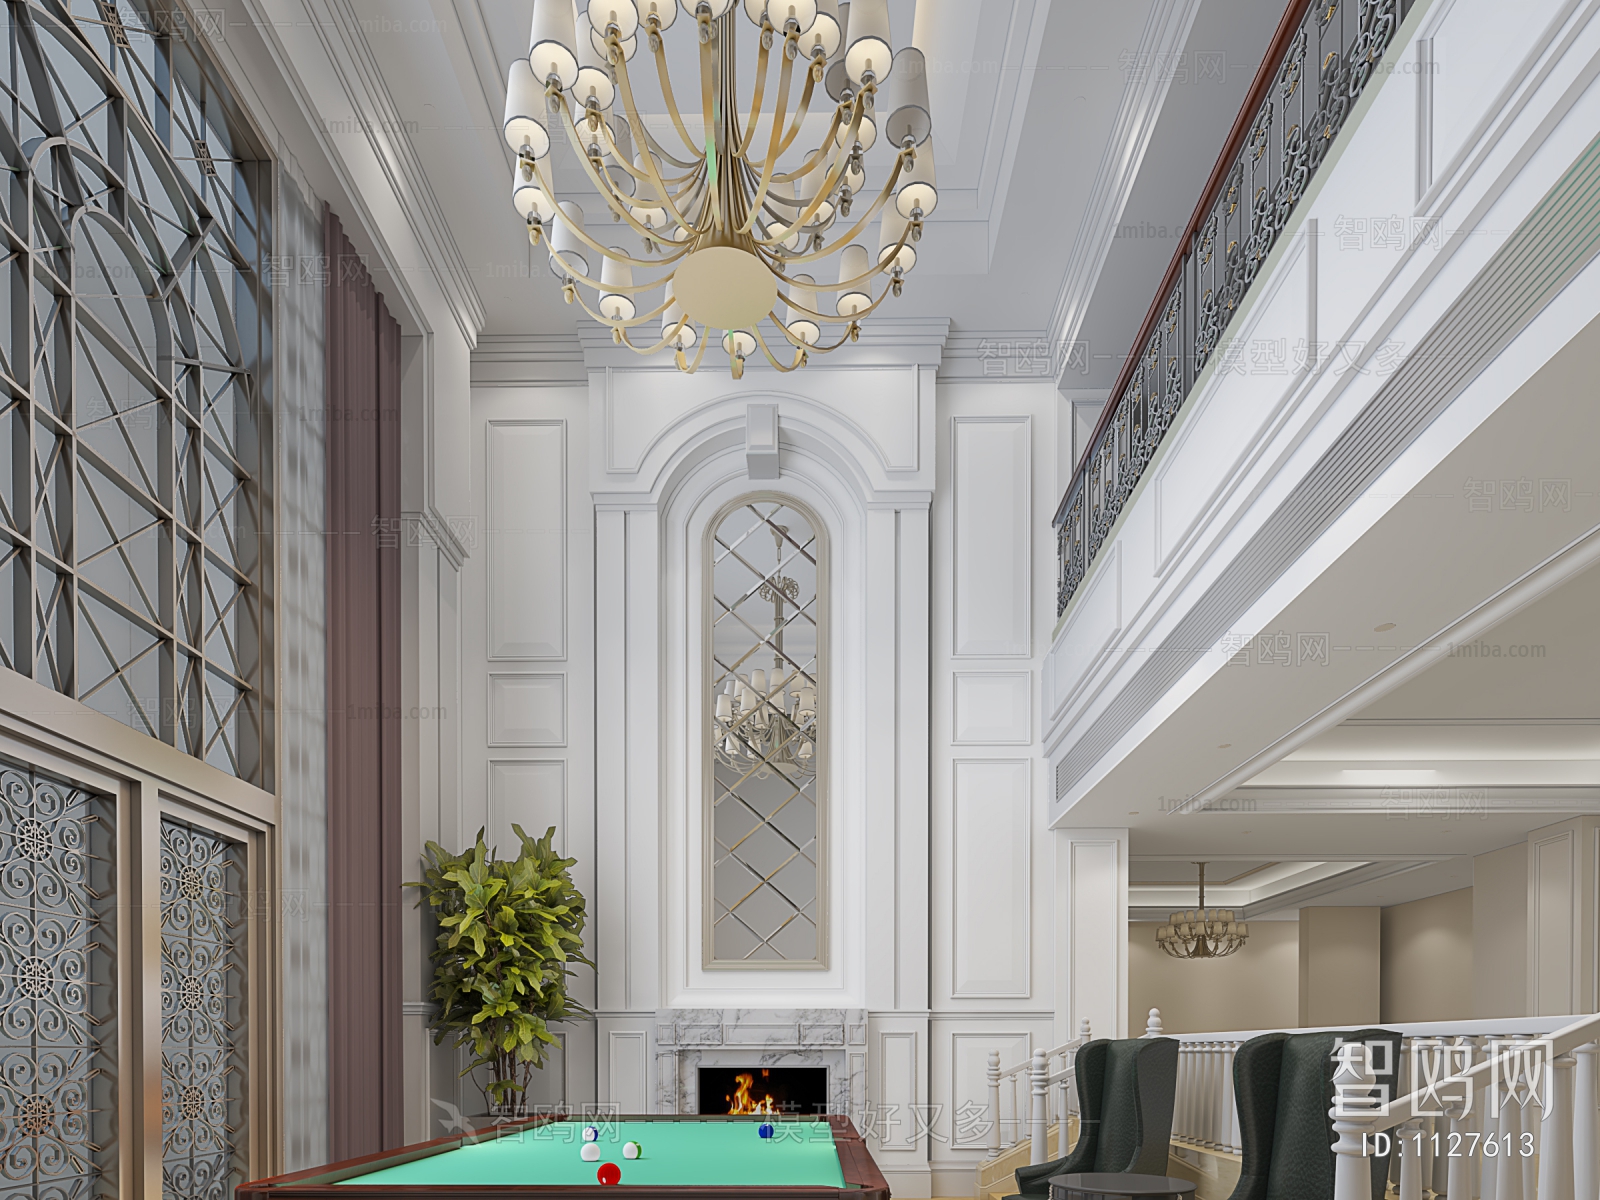 European Style Billiards Room